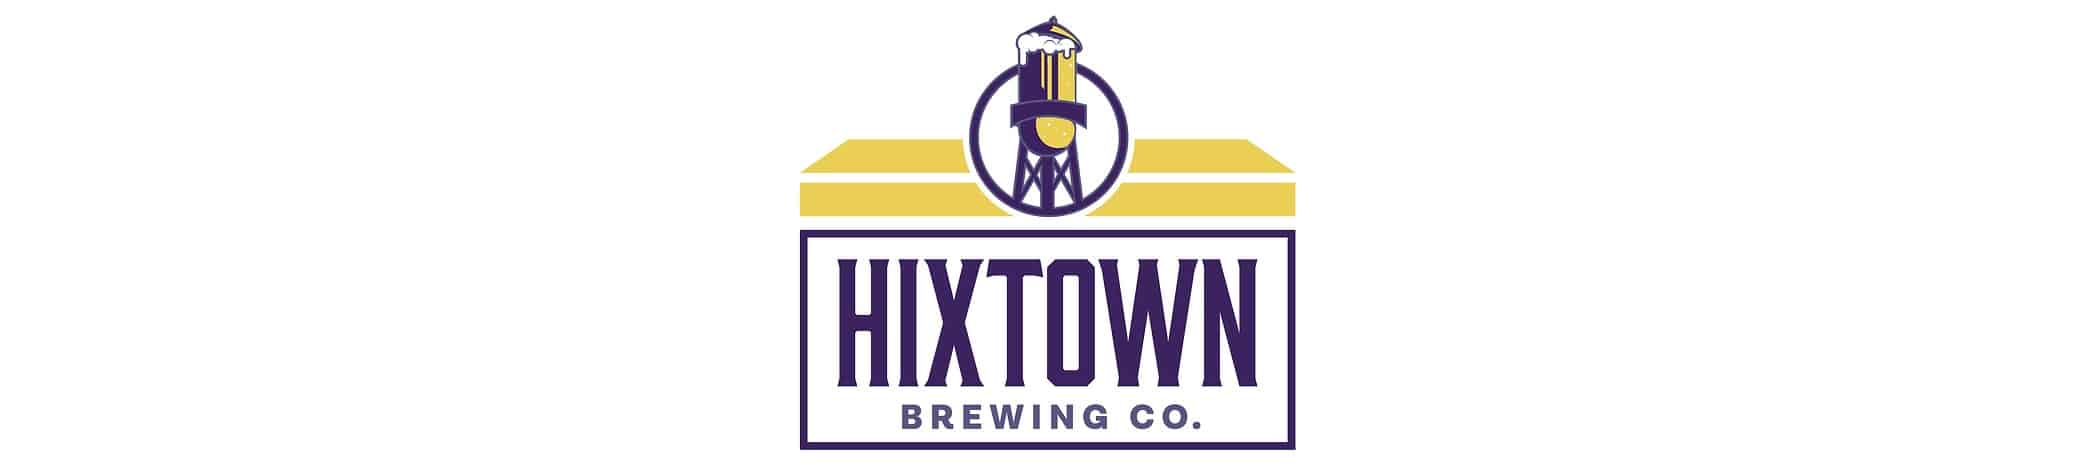 Hixtown Brewing Co